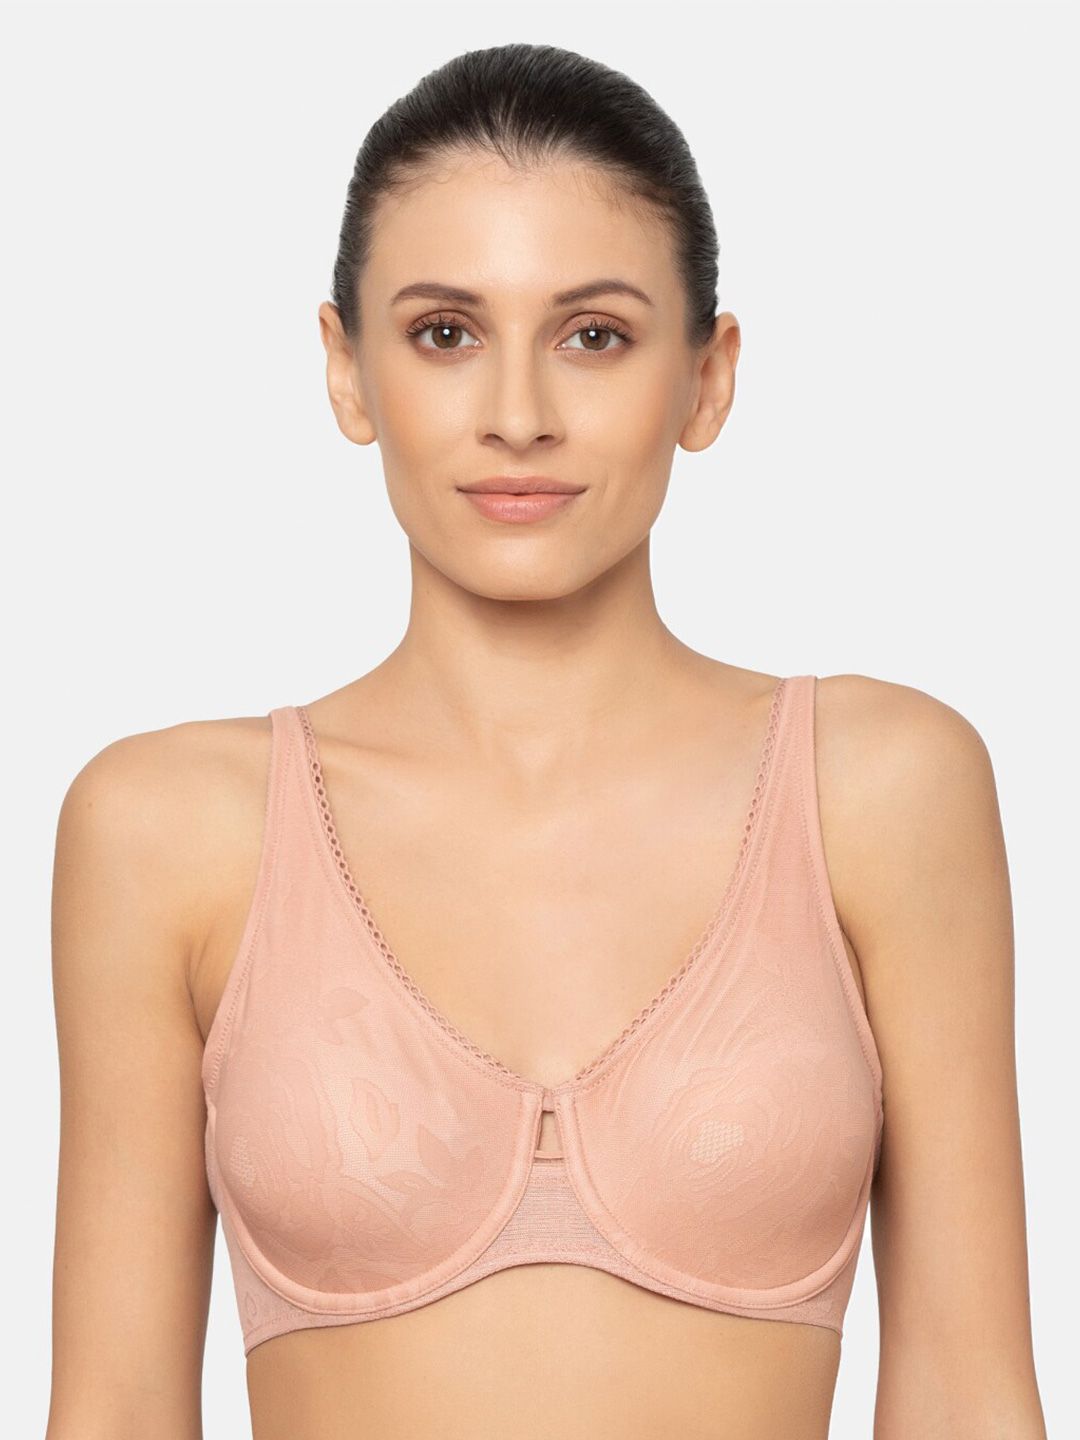 Buy PrettyCat Brown T-Shirt Bra & Panty Set for Women Online @ Tata CLiQ